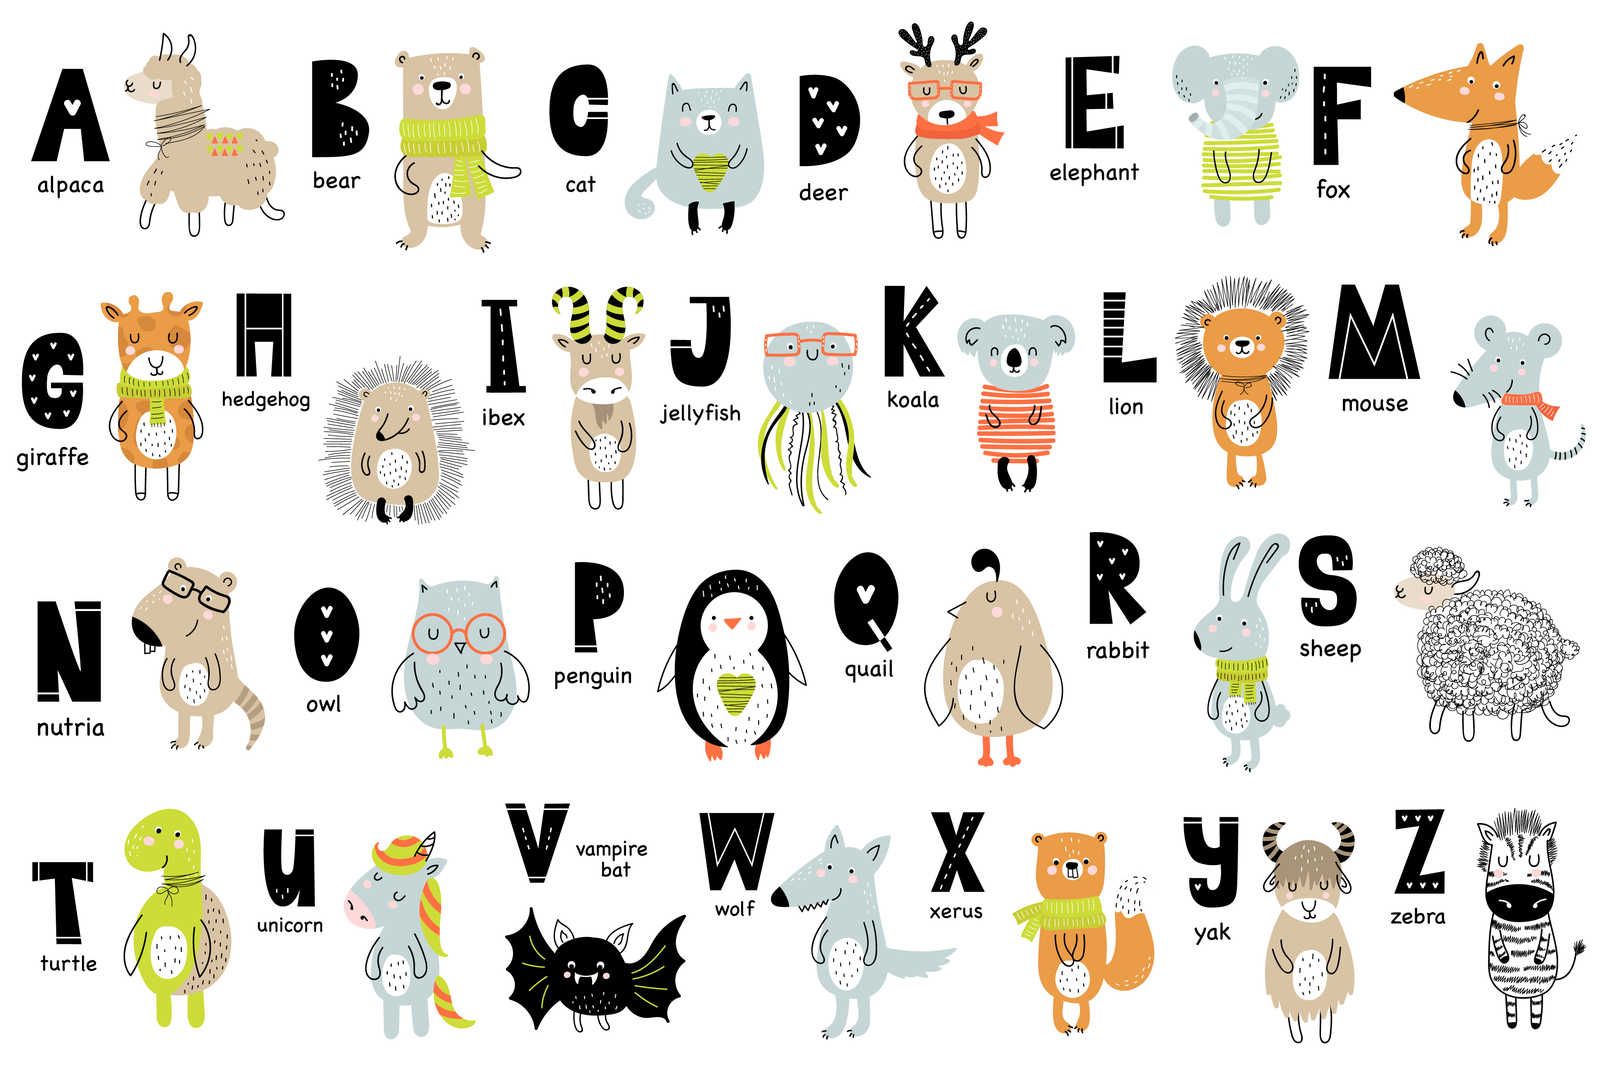             Canvas Alphabet with Animals and Animal Names - 90 cm x 60 cm
        